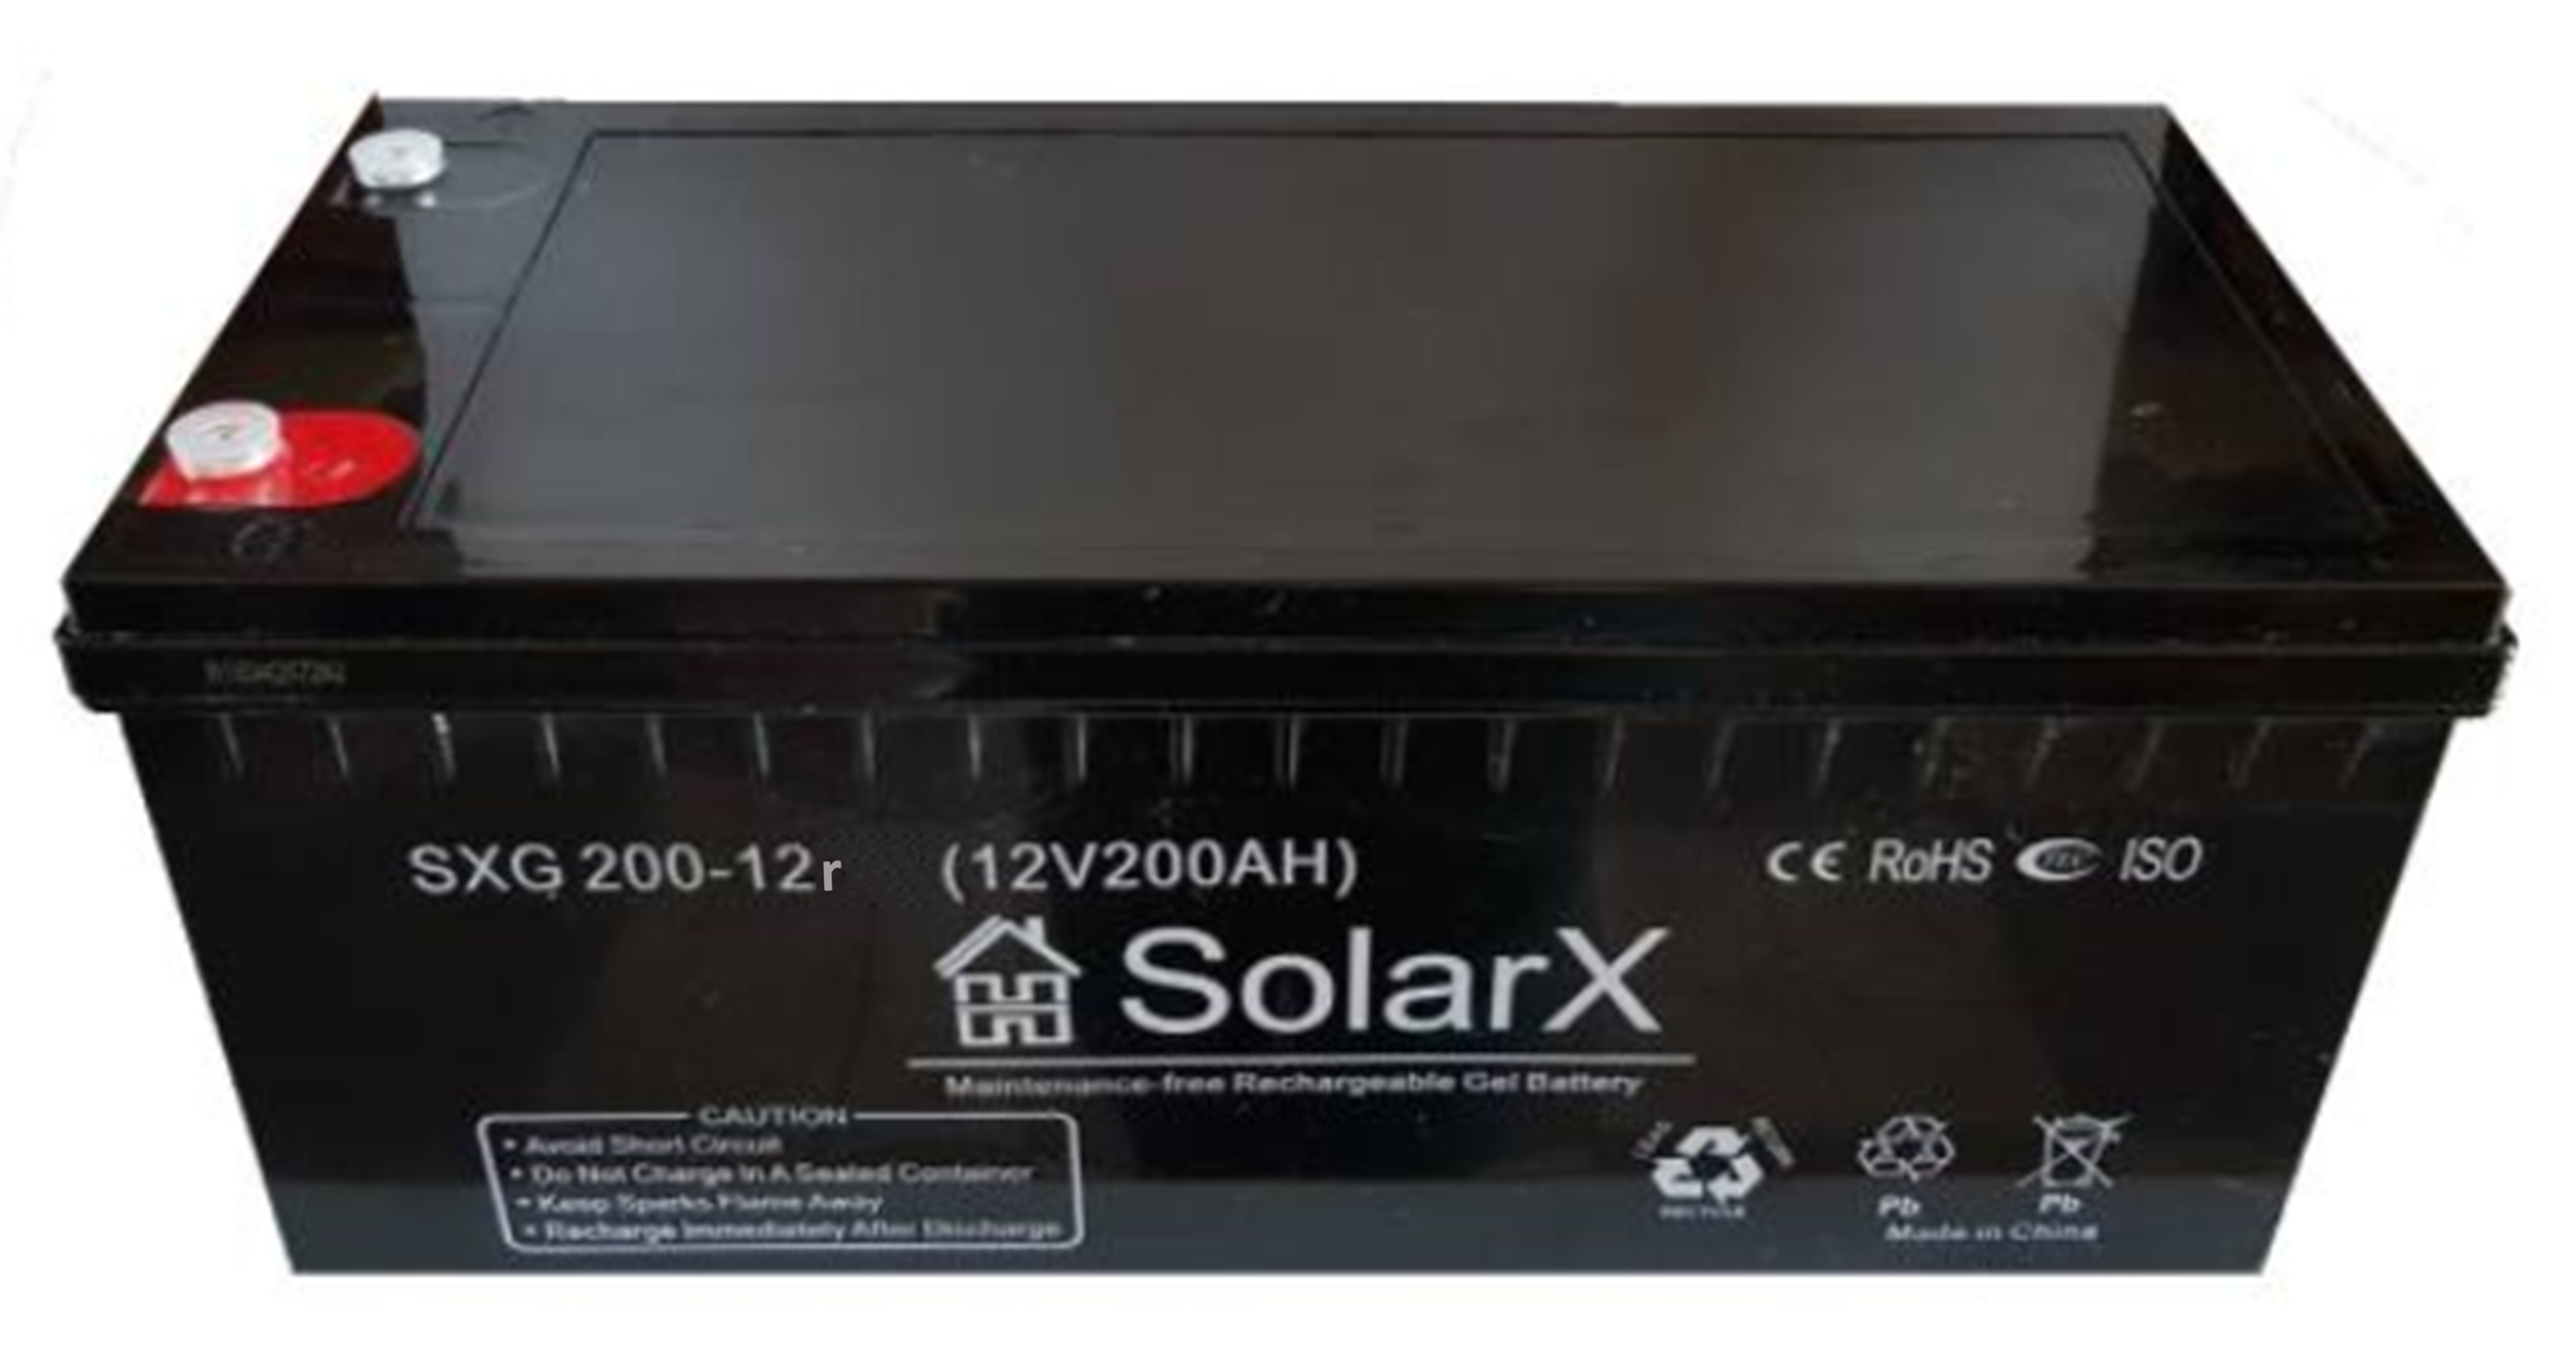 Solarx sxg 200 12r